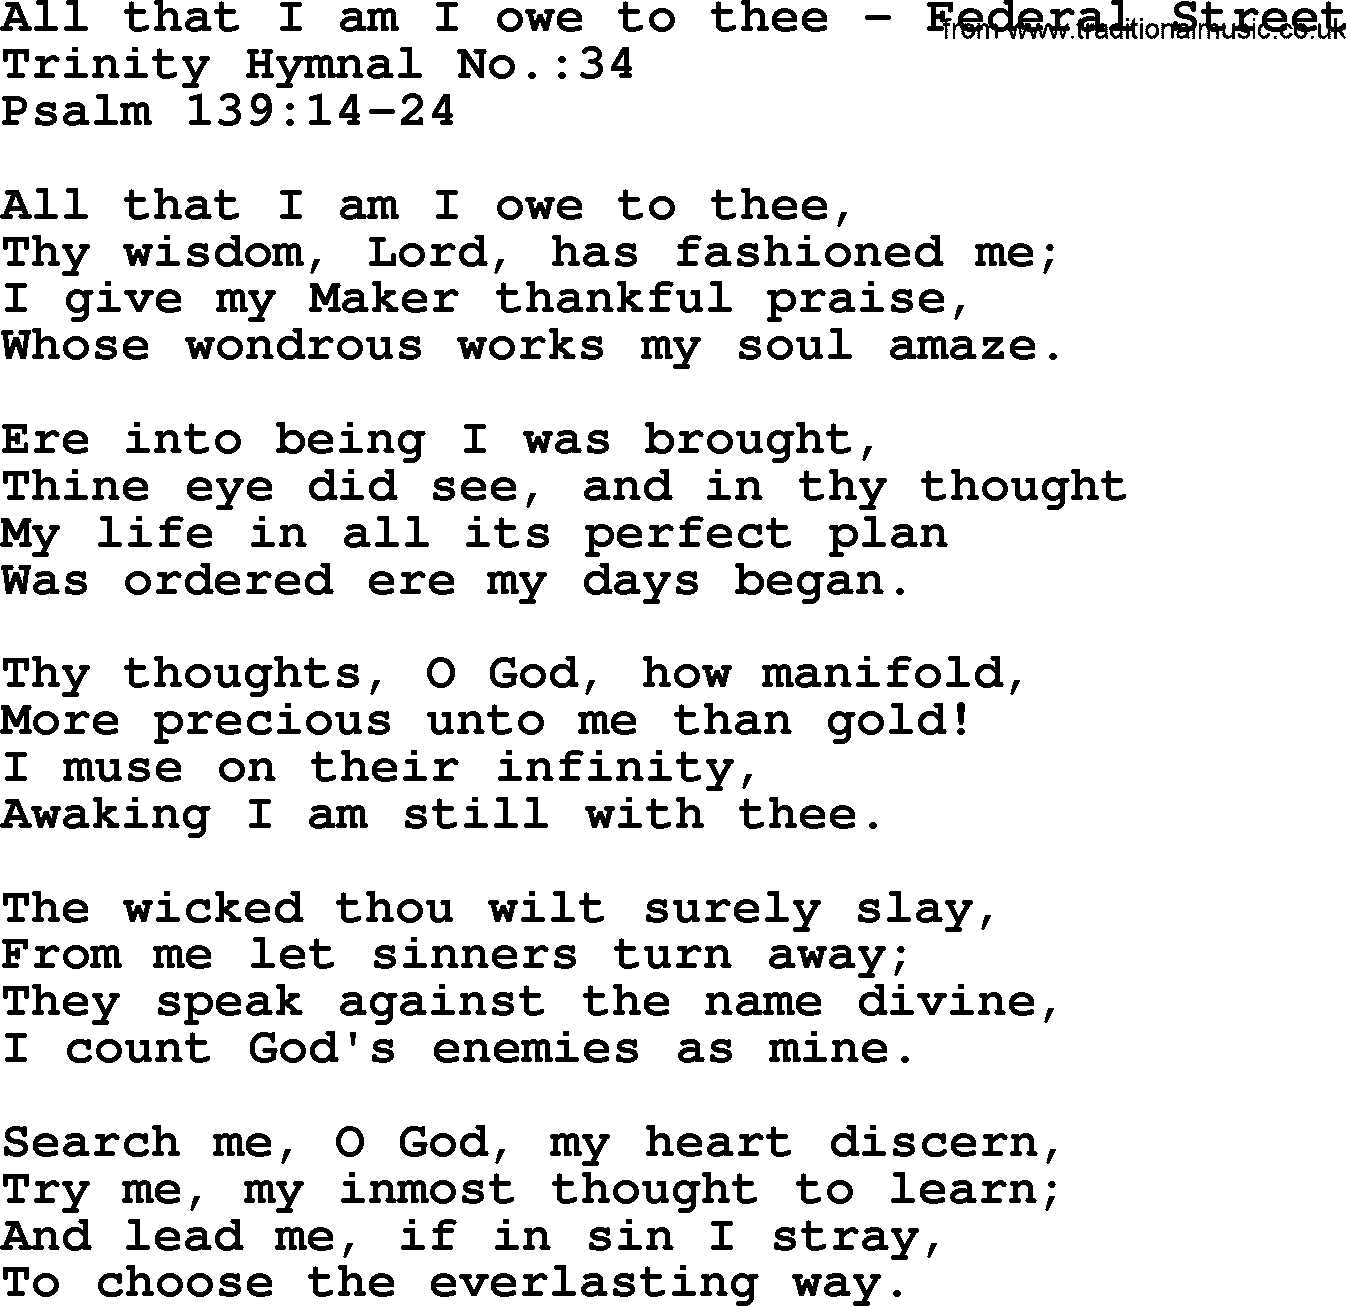 Trinity Hymnal Hymn: All That I Am I Owe To Thee--Federal Street, lyrics with midi music